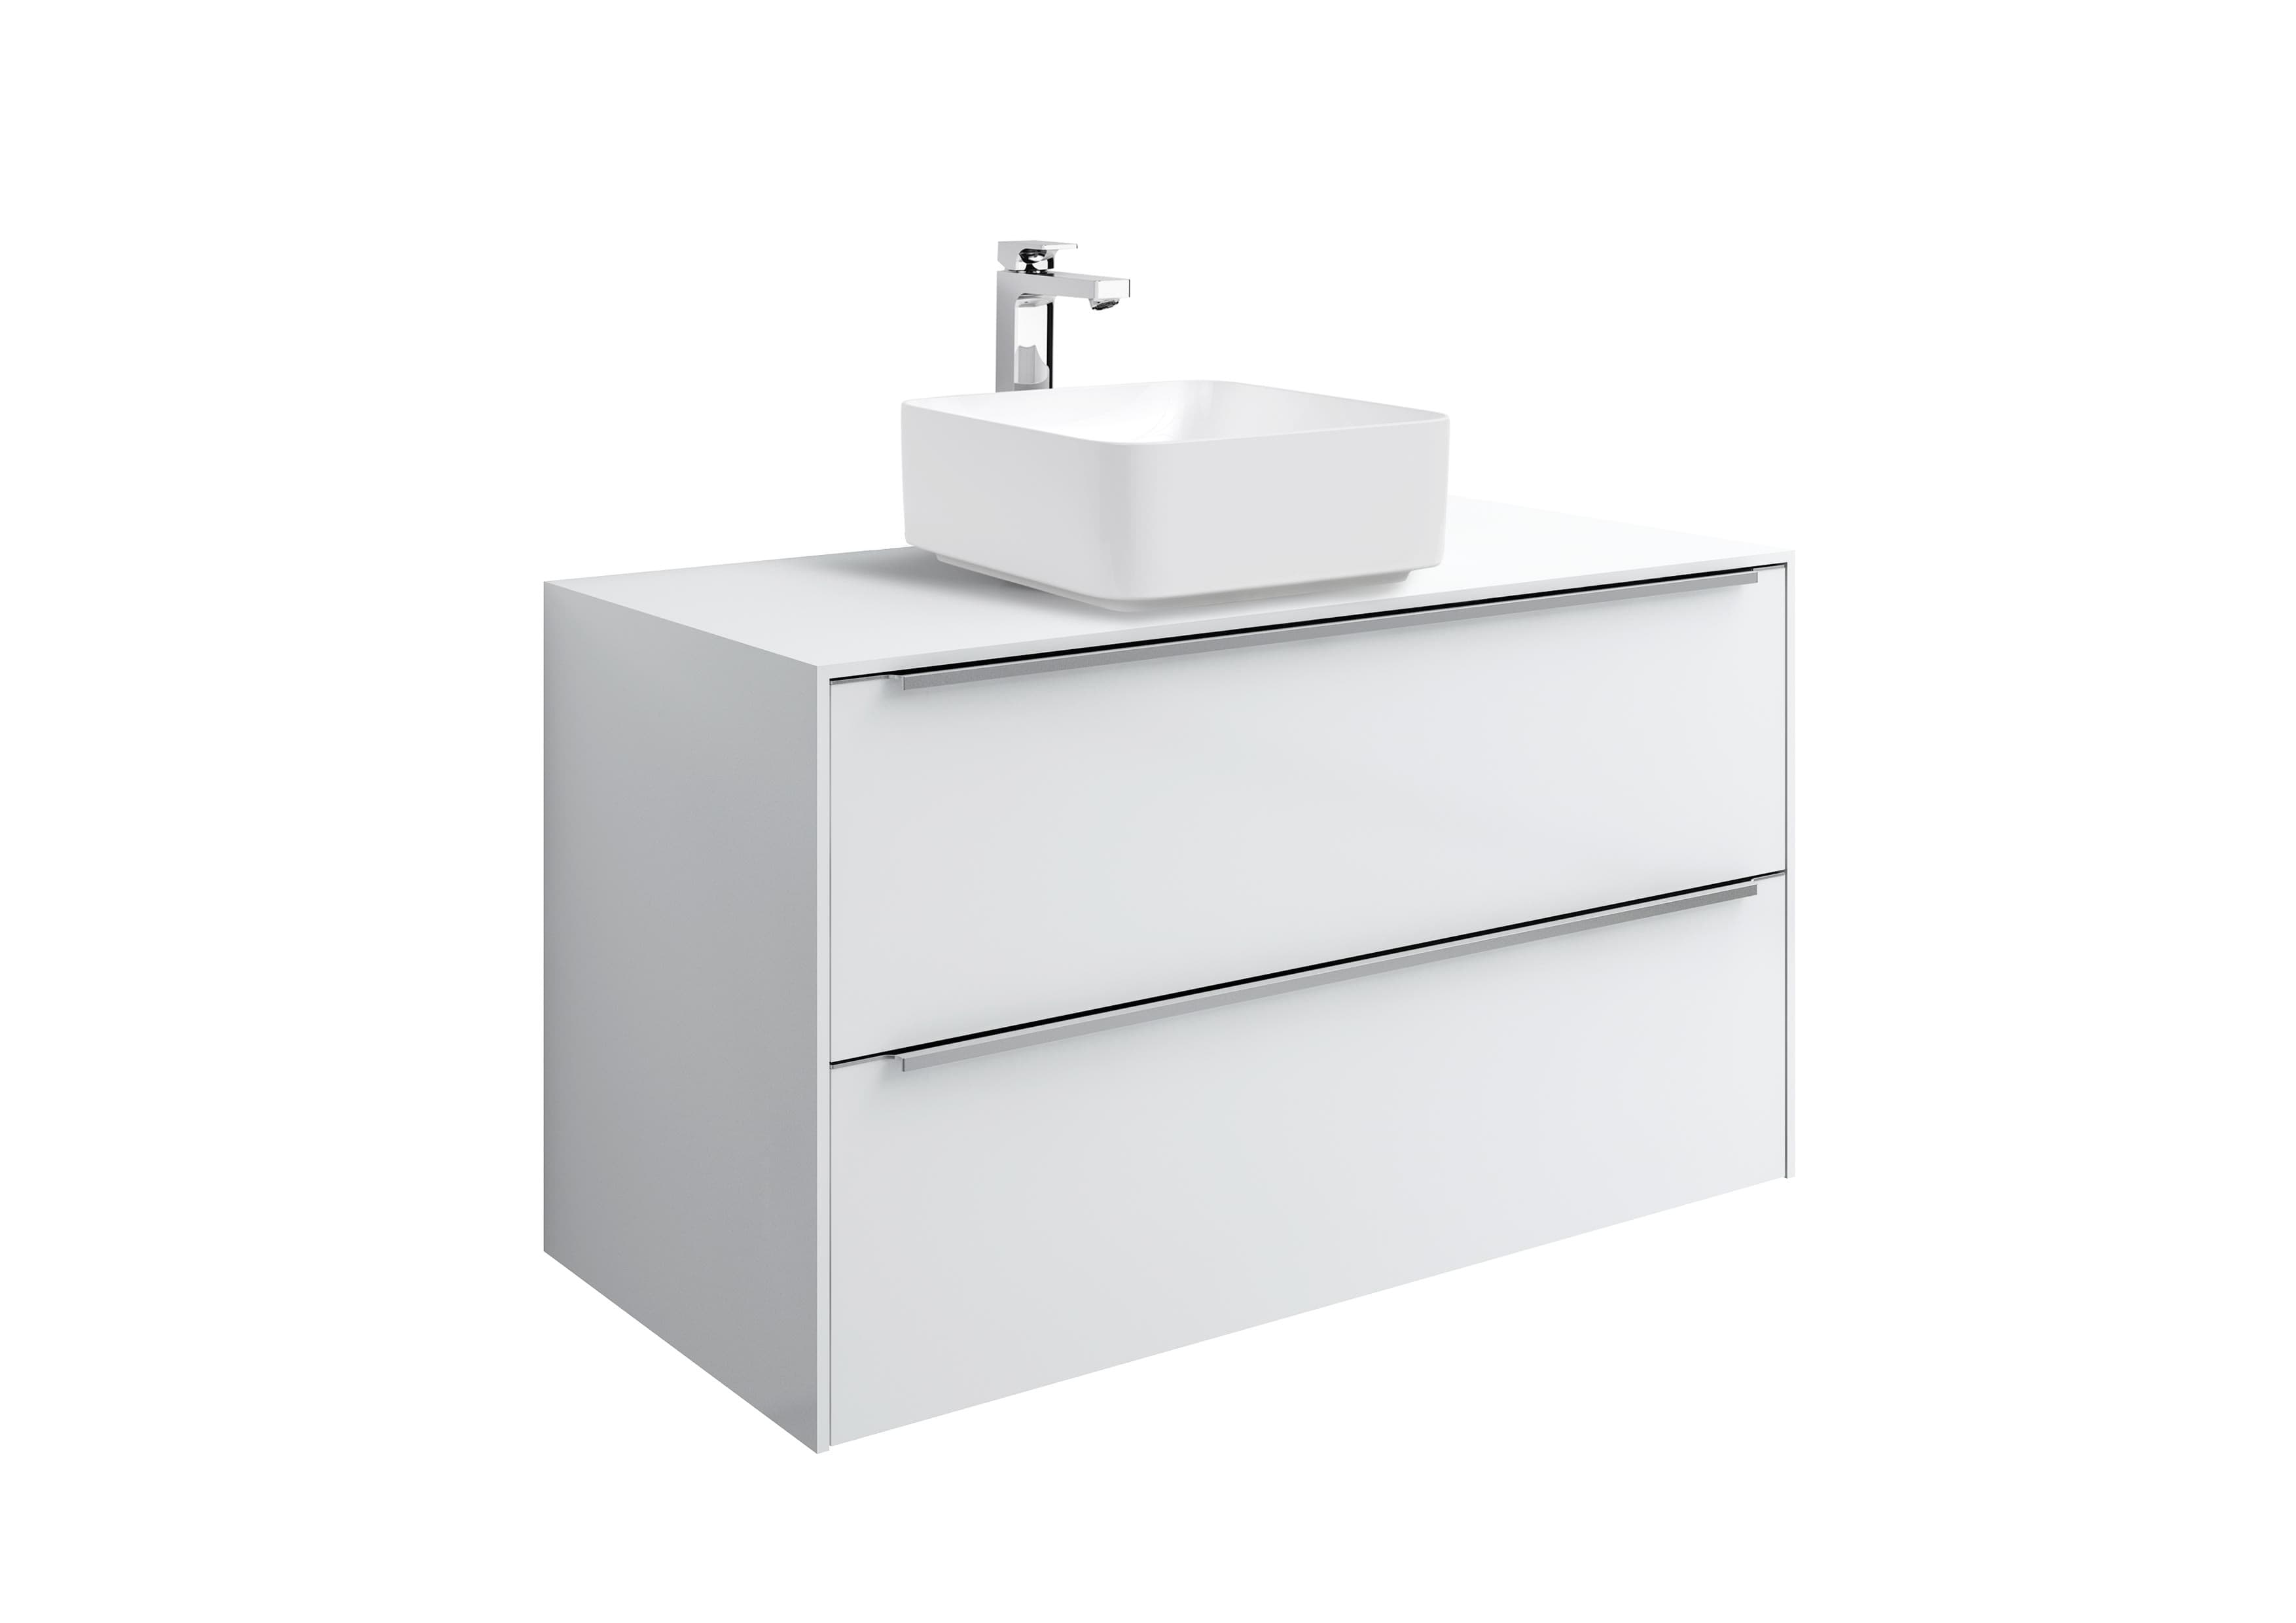 Sanitaire Meubles Salle de bain INSPIRA A851081402 Meuble 2 tiroirs avec plan pour vasque à poser Roca 9 - Mirage ceramica